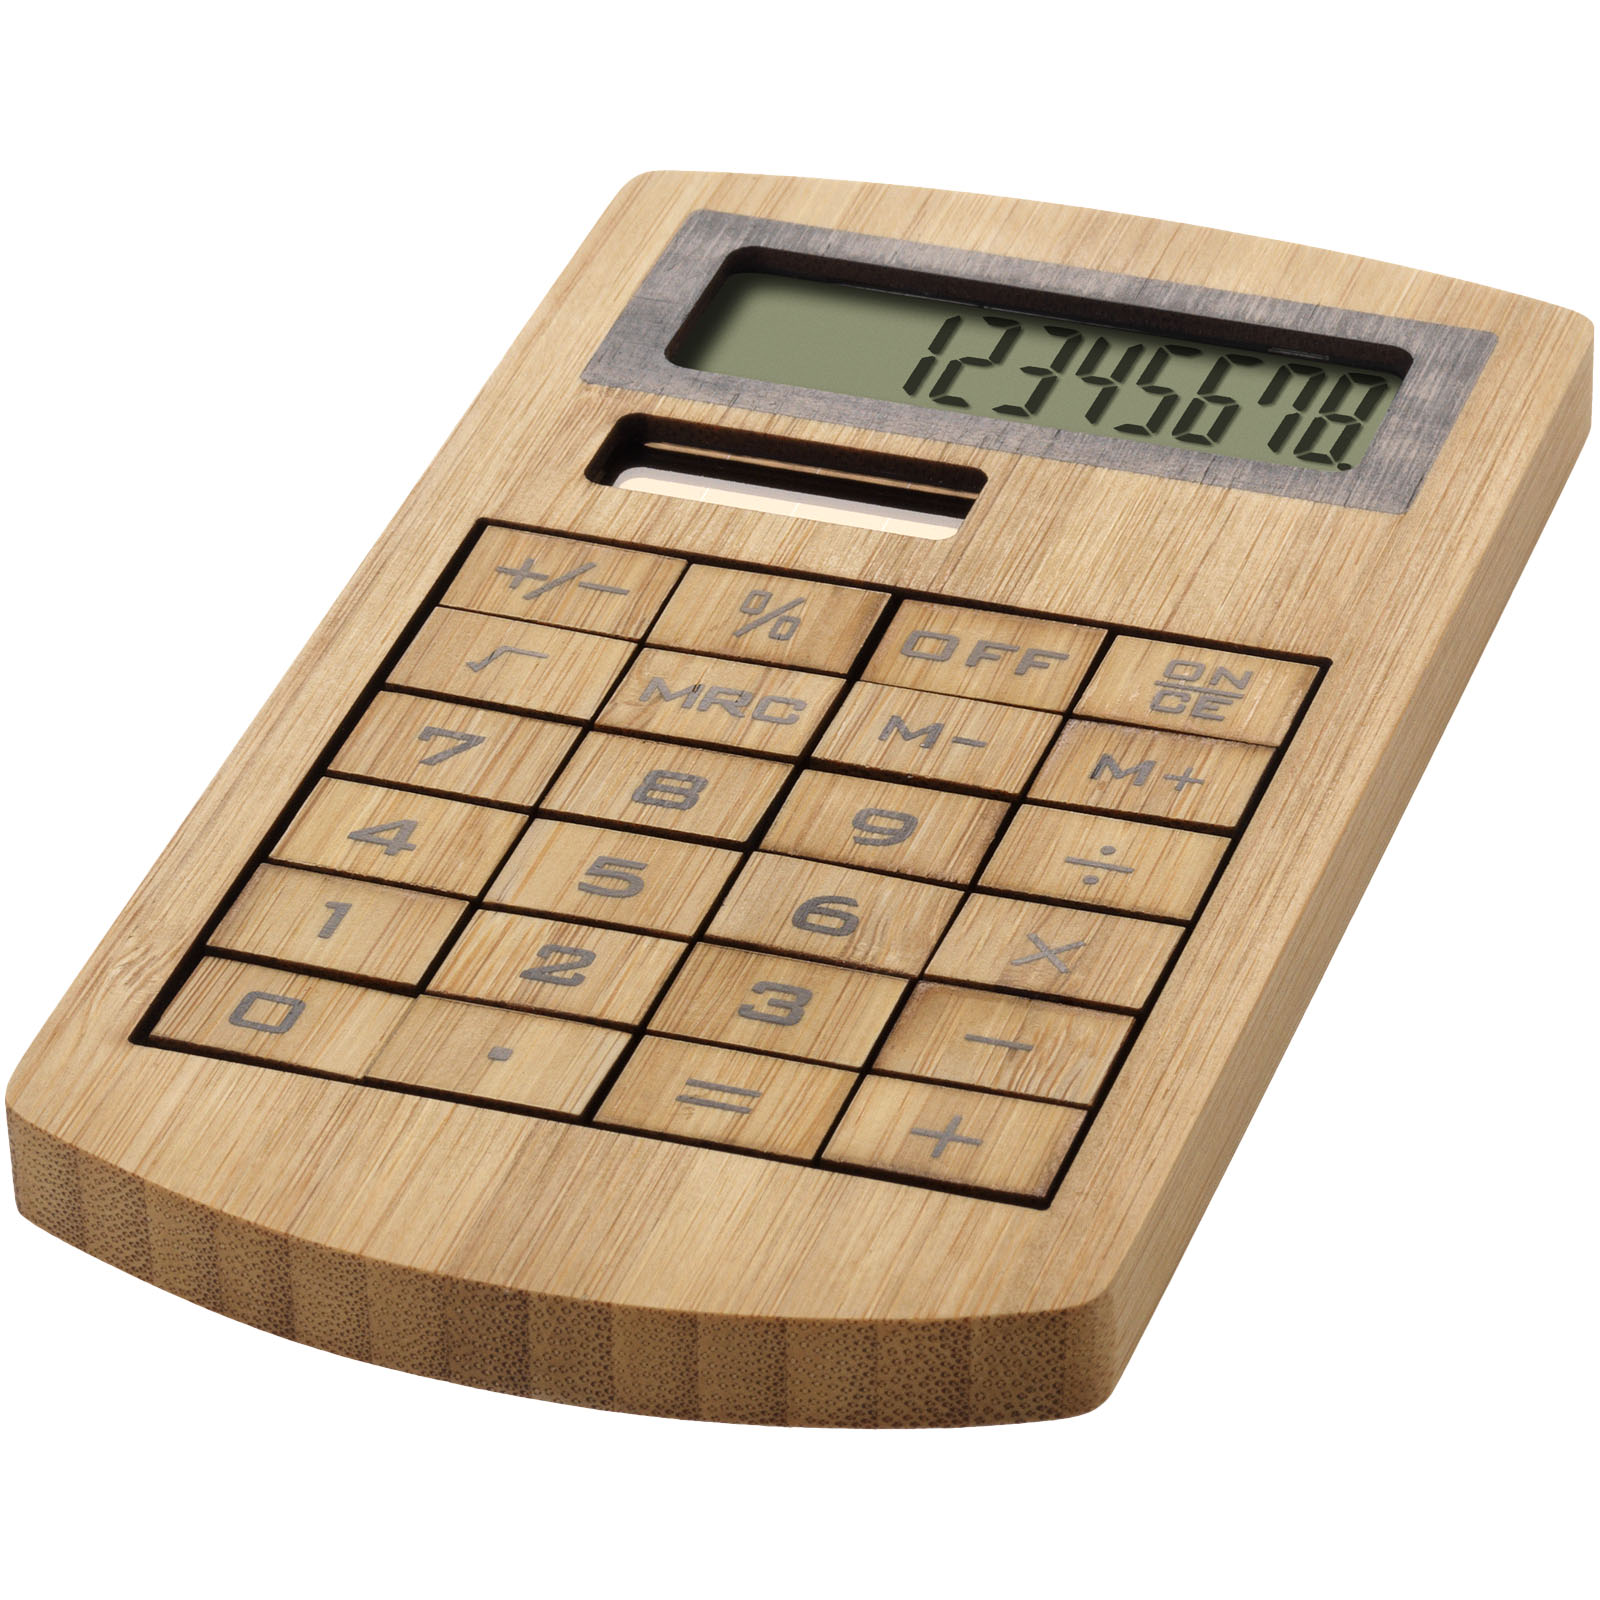 Notebooks & Desk Essentials - Eugene calculator made of bamboo